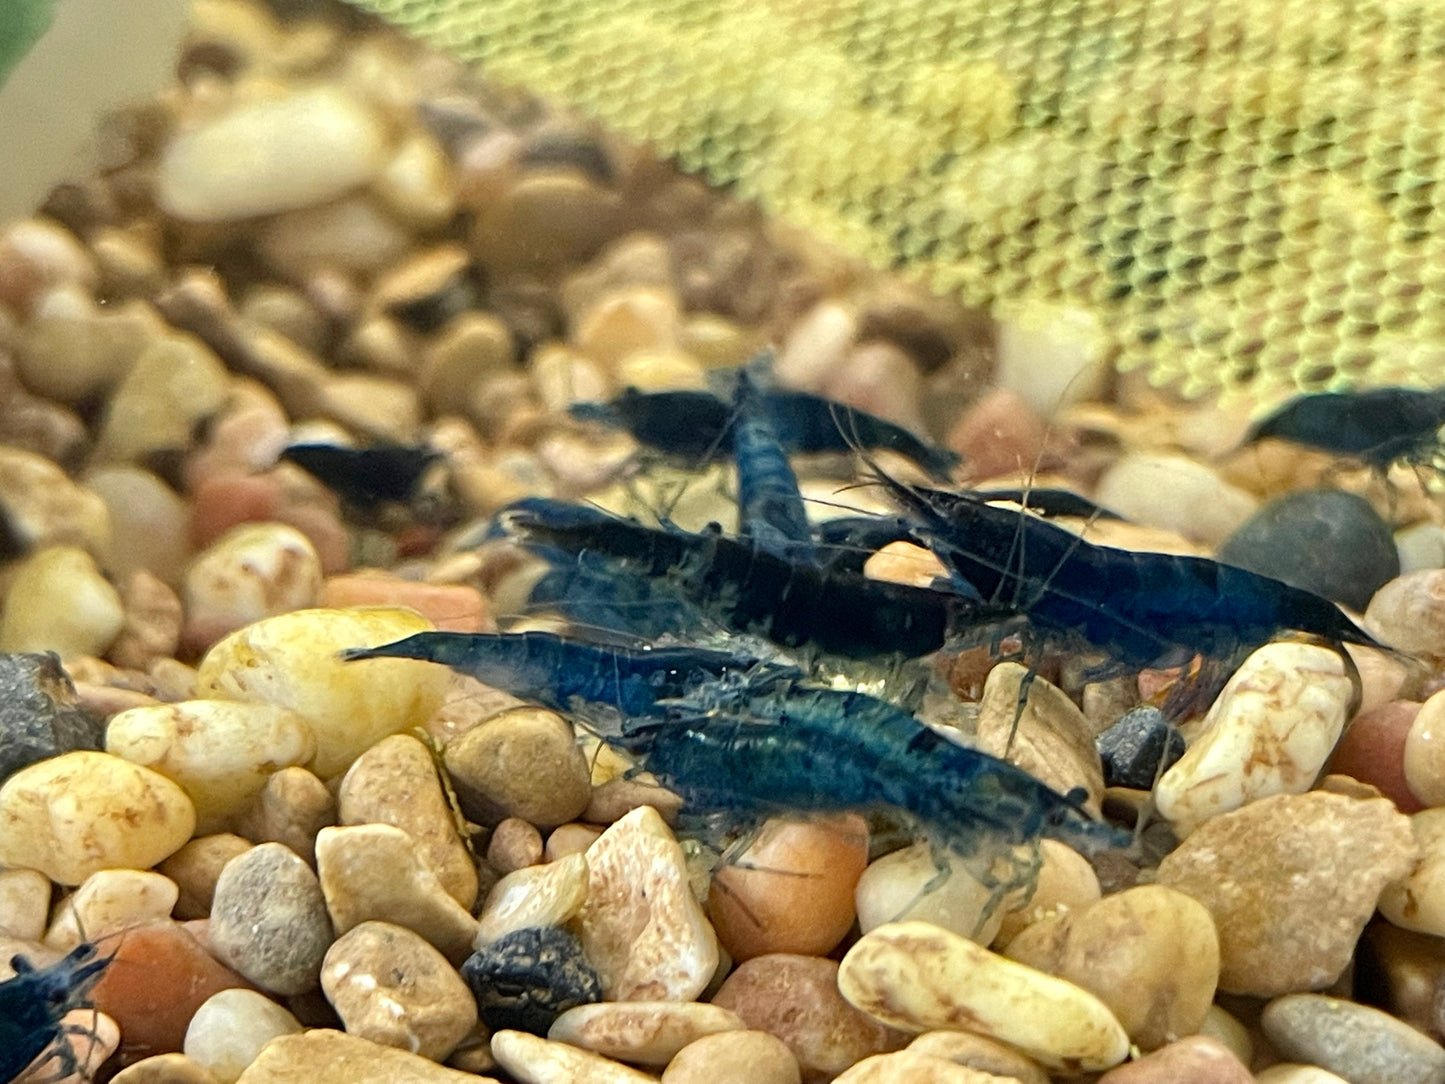 Blue Dream Shrimp (Neocaridina Davidi)